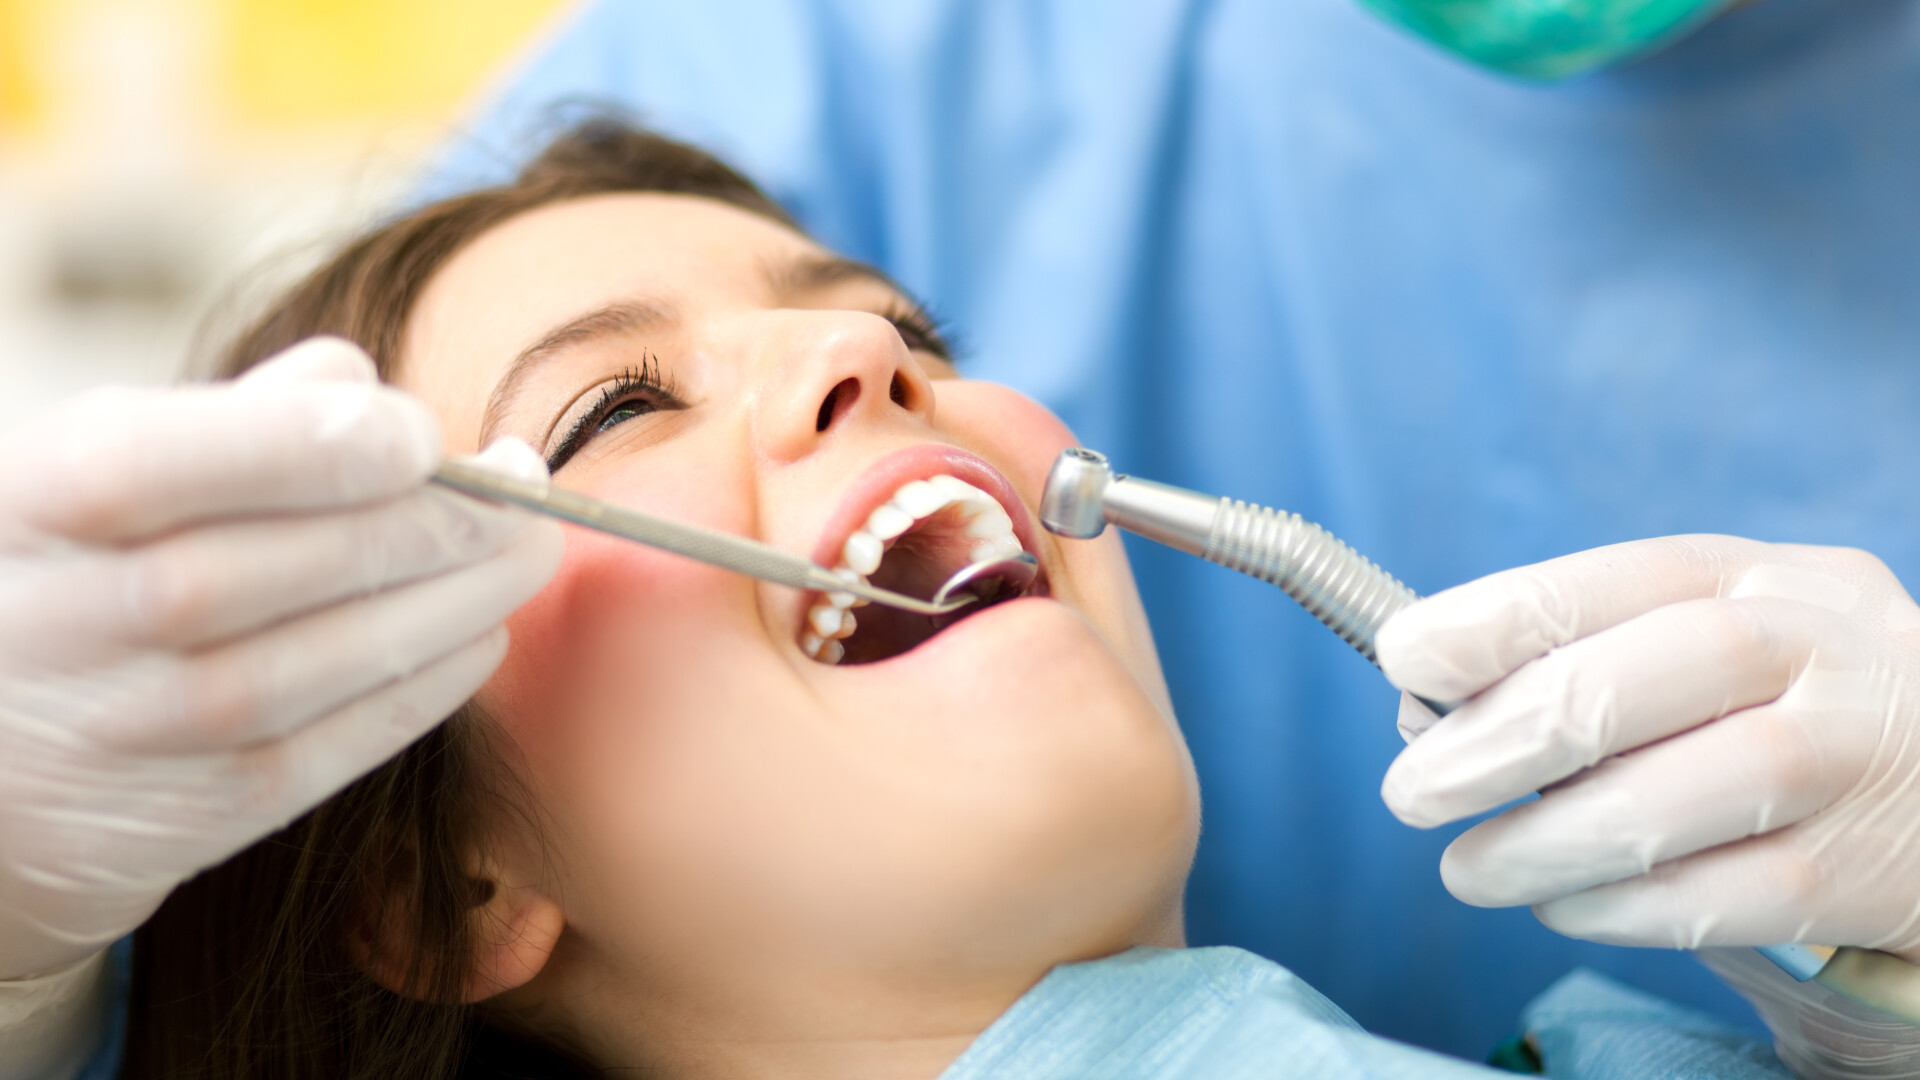 dentist - Shutterstock